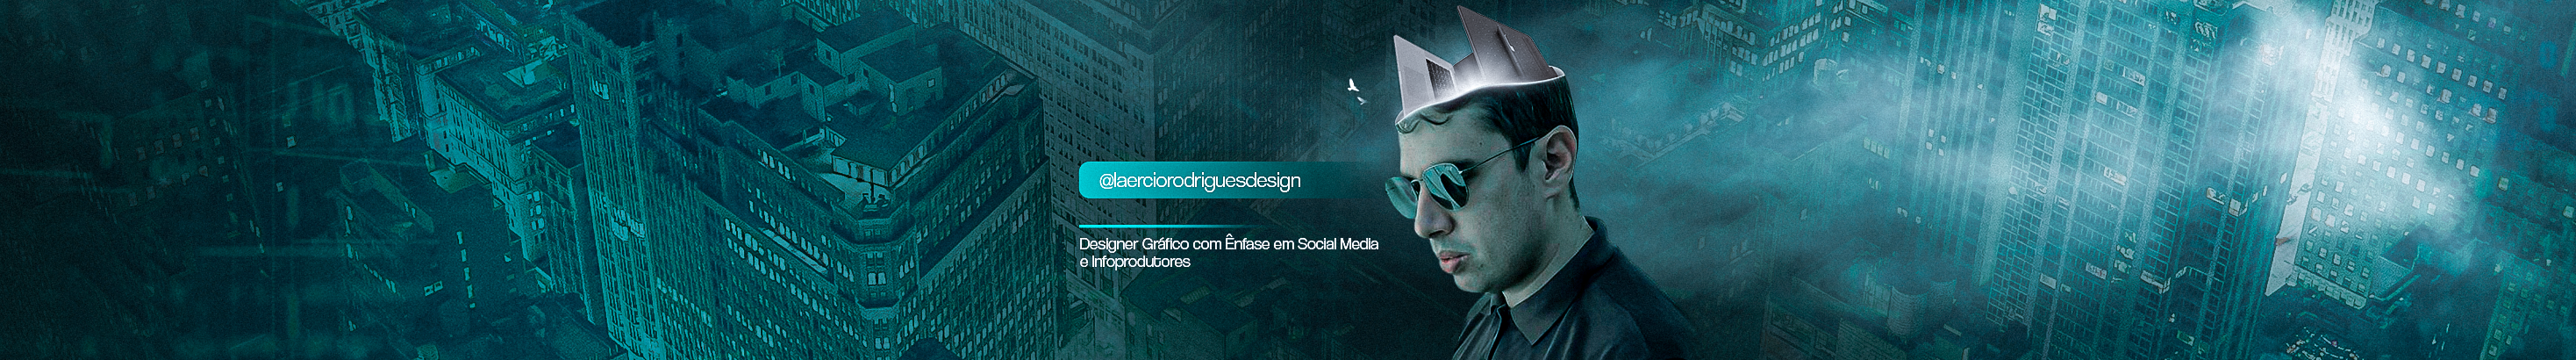 Laércio Rodrigues's profile banner